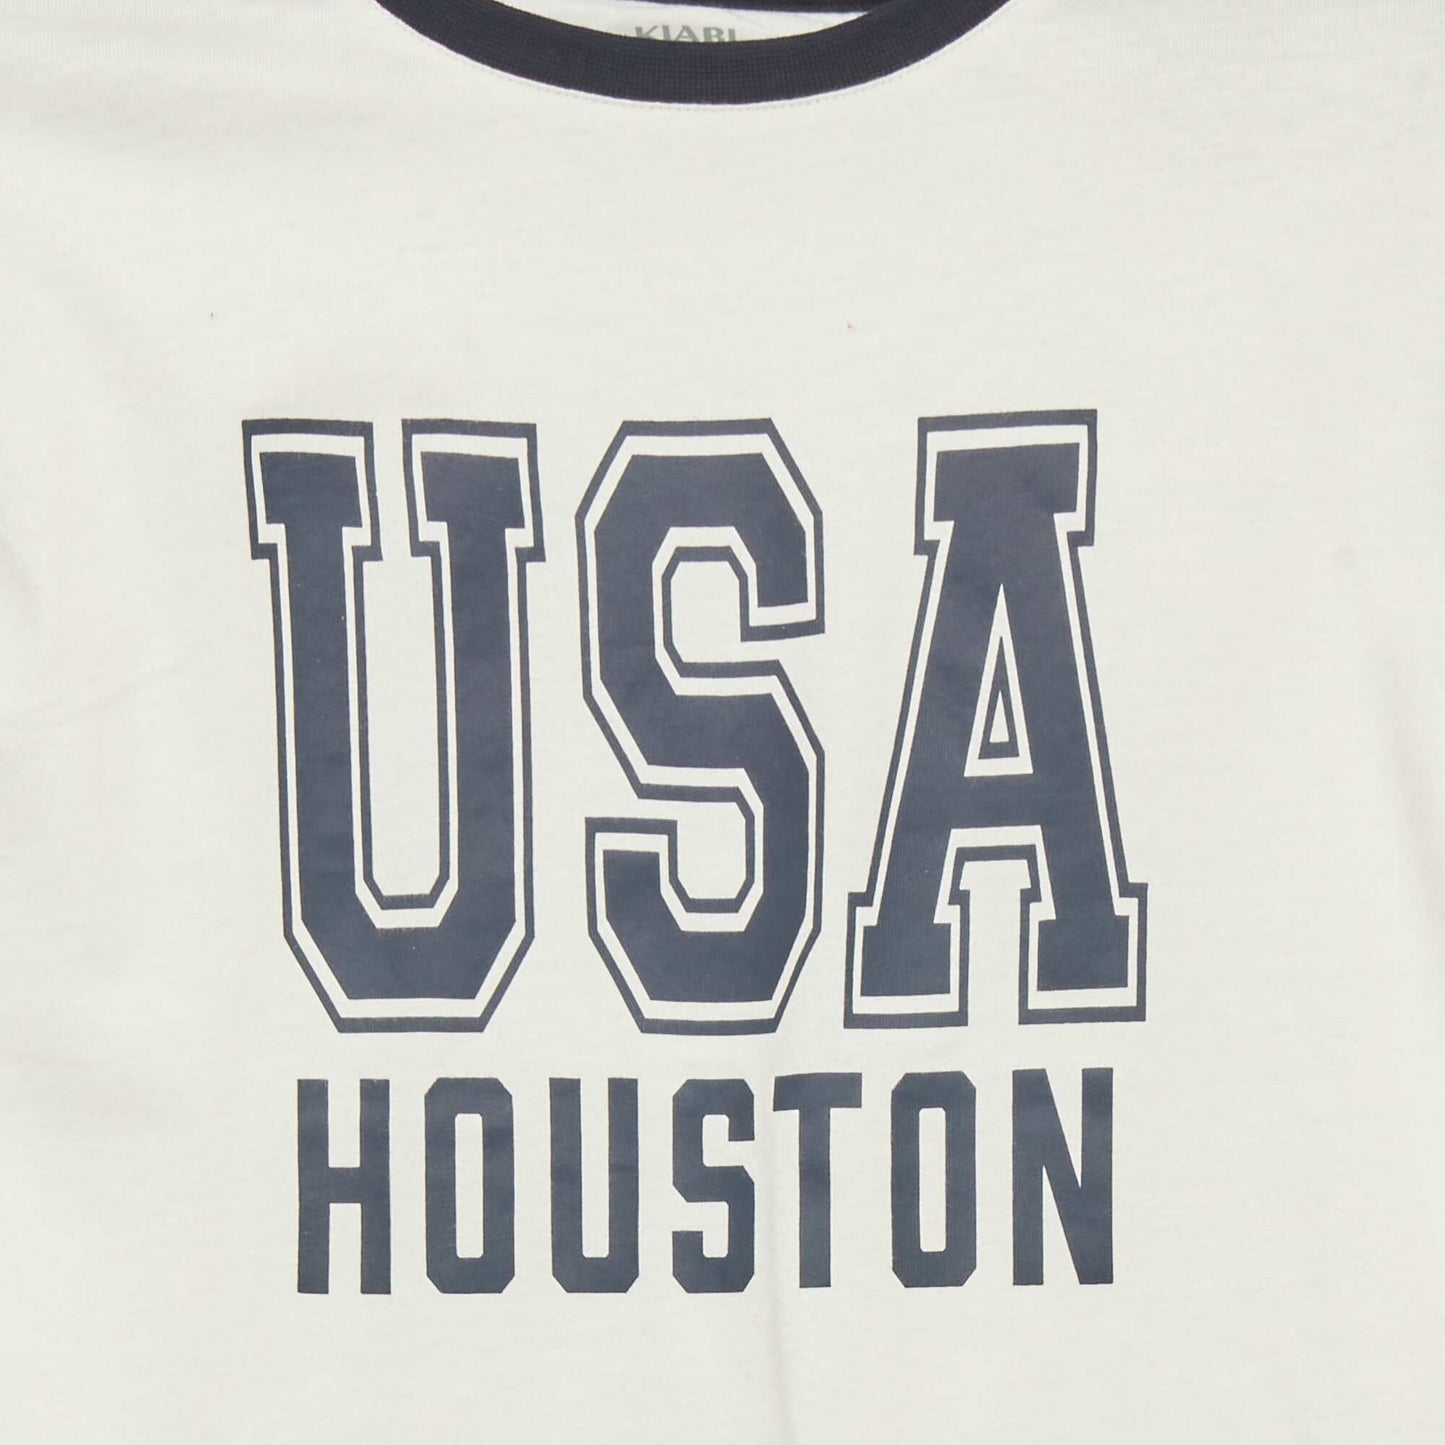 T-shirt imprimé 'USA' 'Houston' Blanc